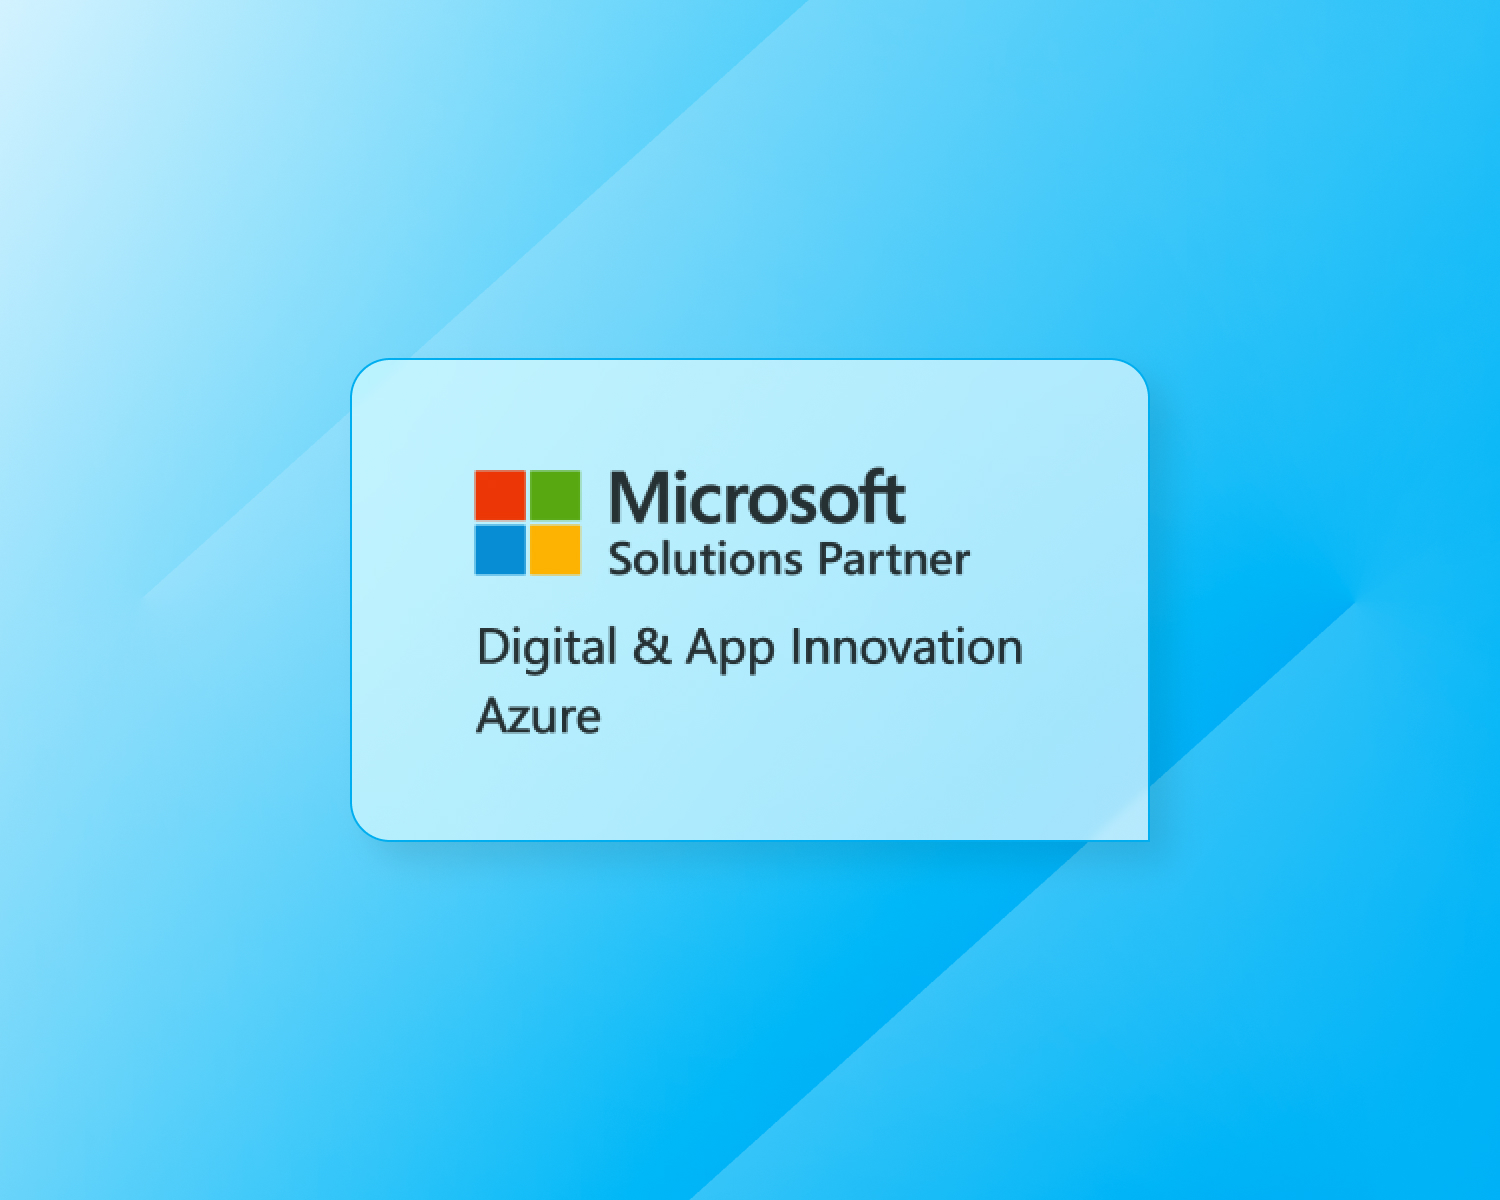 NIX Achieves Microsoft Solutions Partner Designation